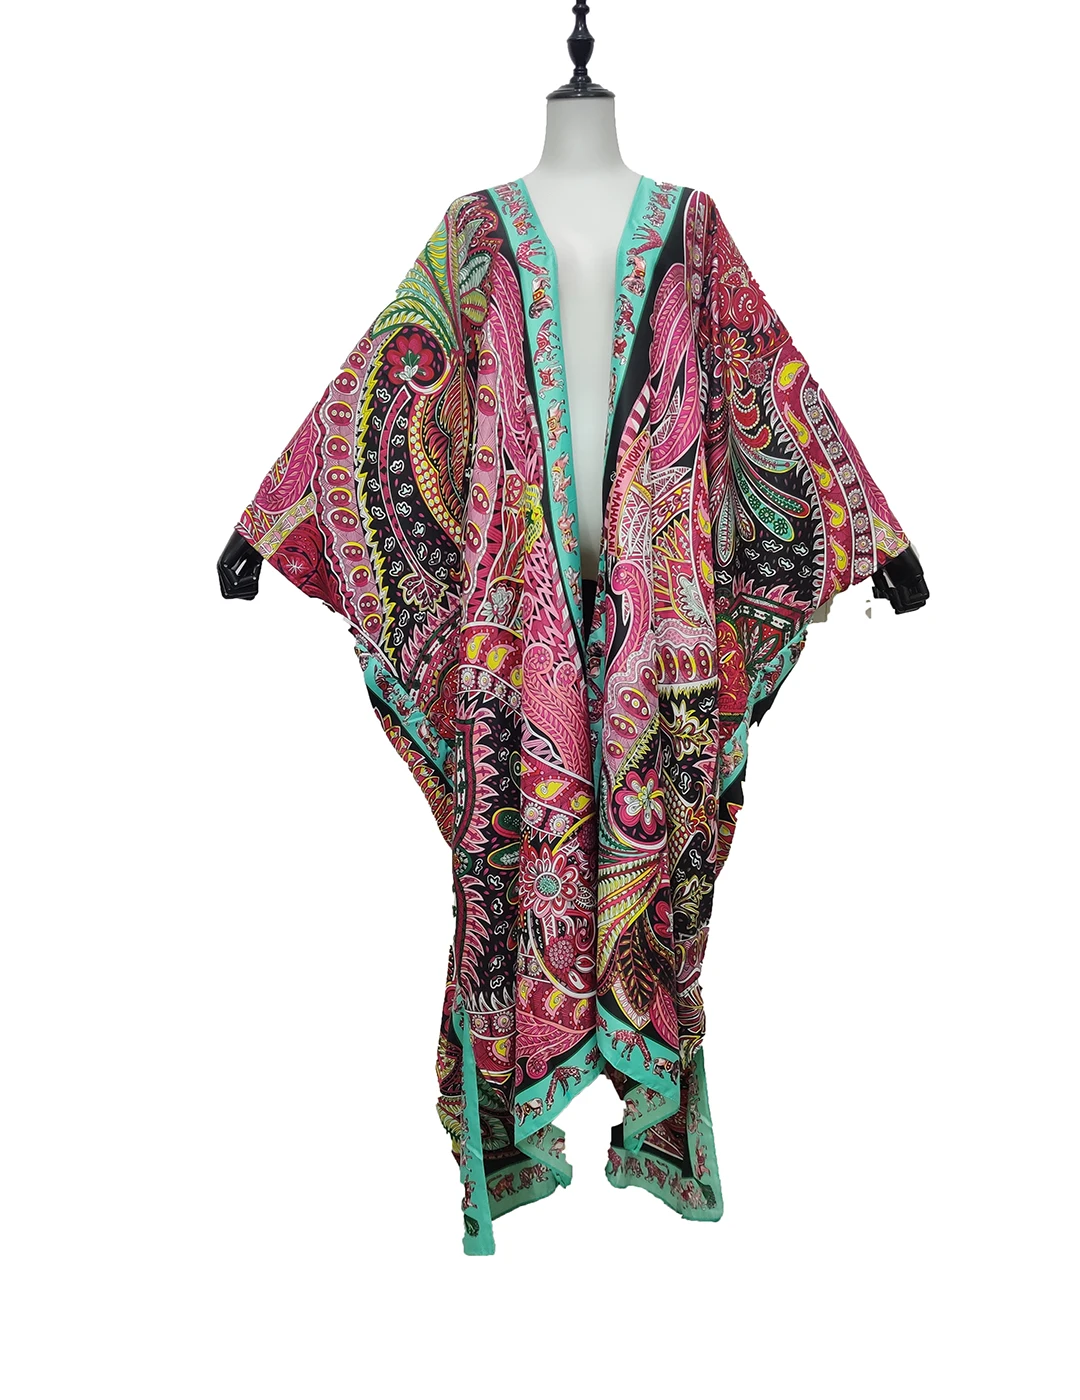 Kimono 2021 European Popular Summer Beach Silk Robe Kaftan Clothes For Women Free Size Open Bohemian Quality Dry Holiday Coat